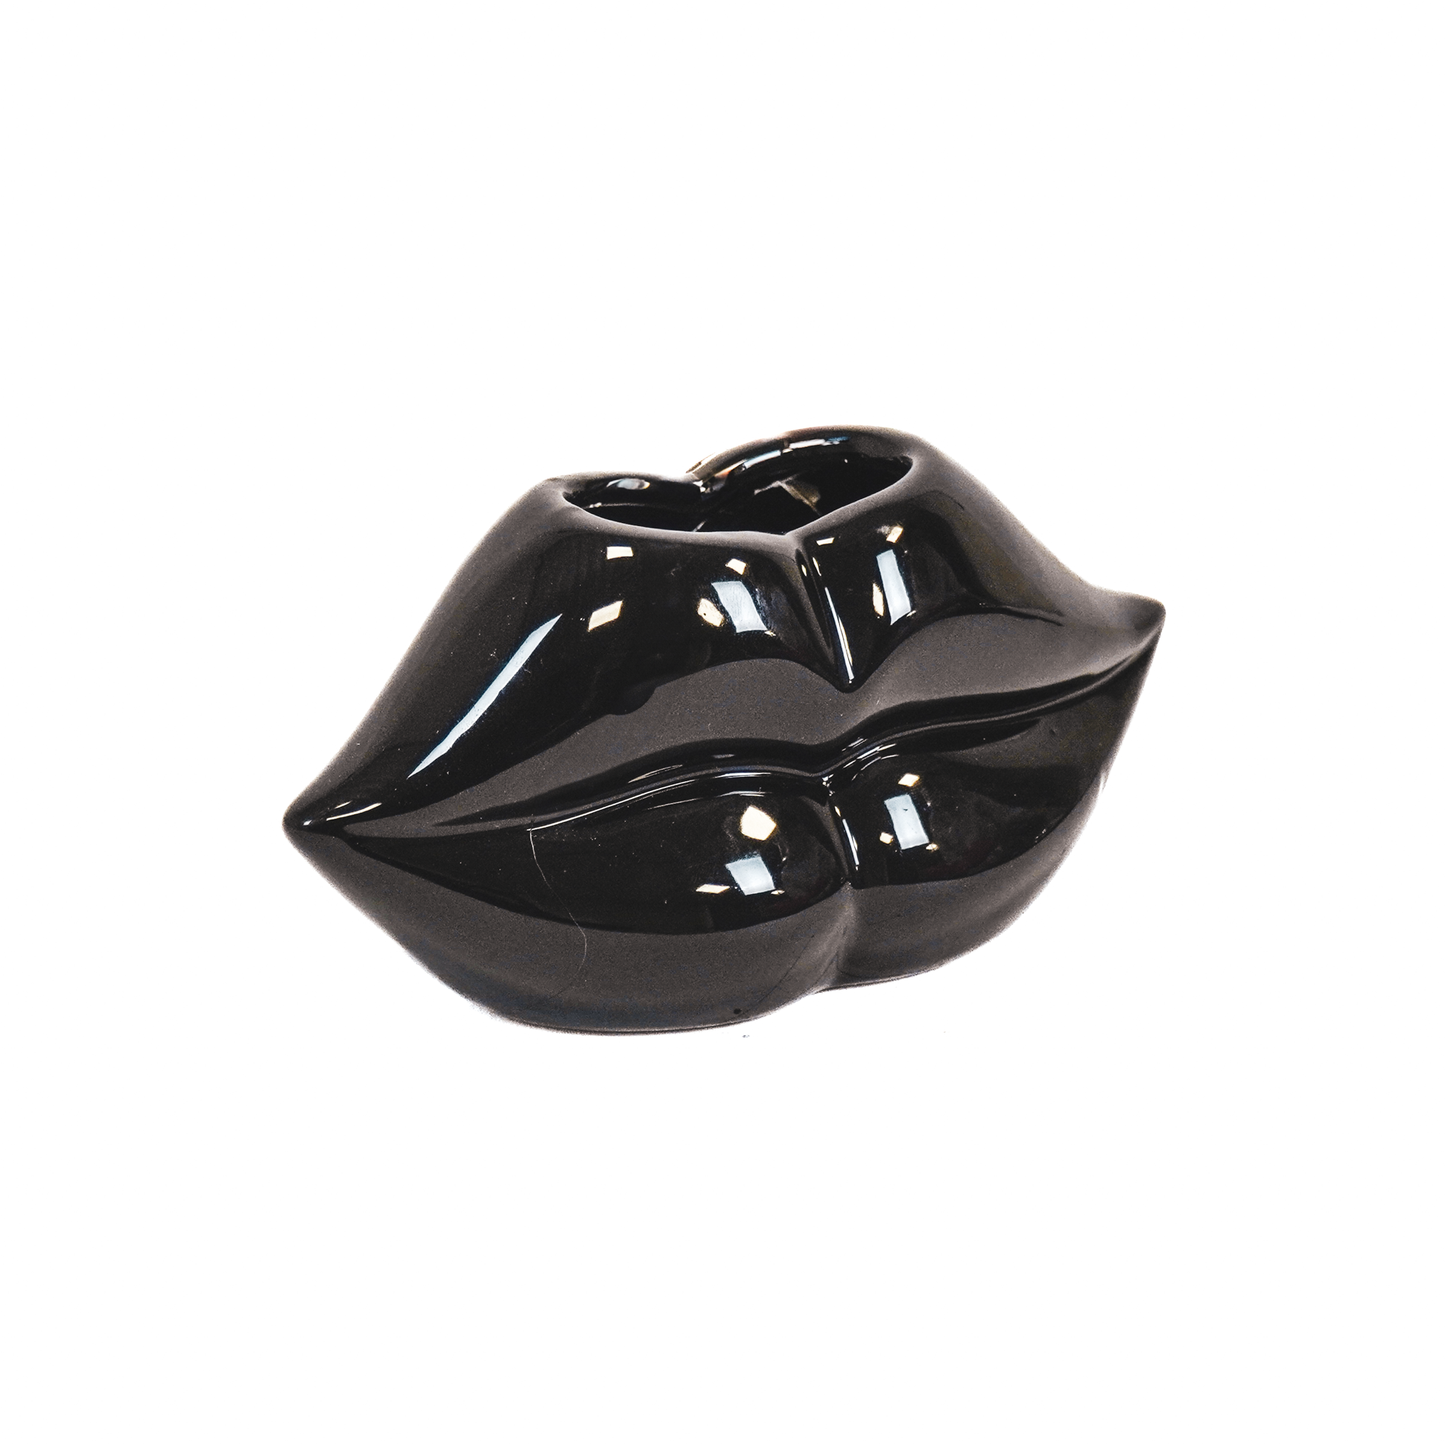 Pot - Lip - Ceramic - Black - 15,5x6,5x7,5cm